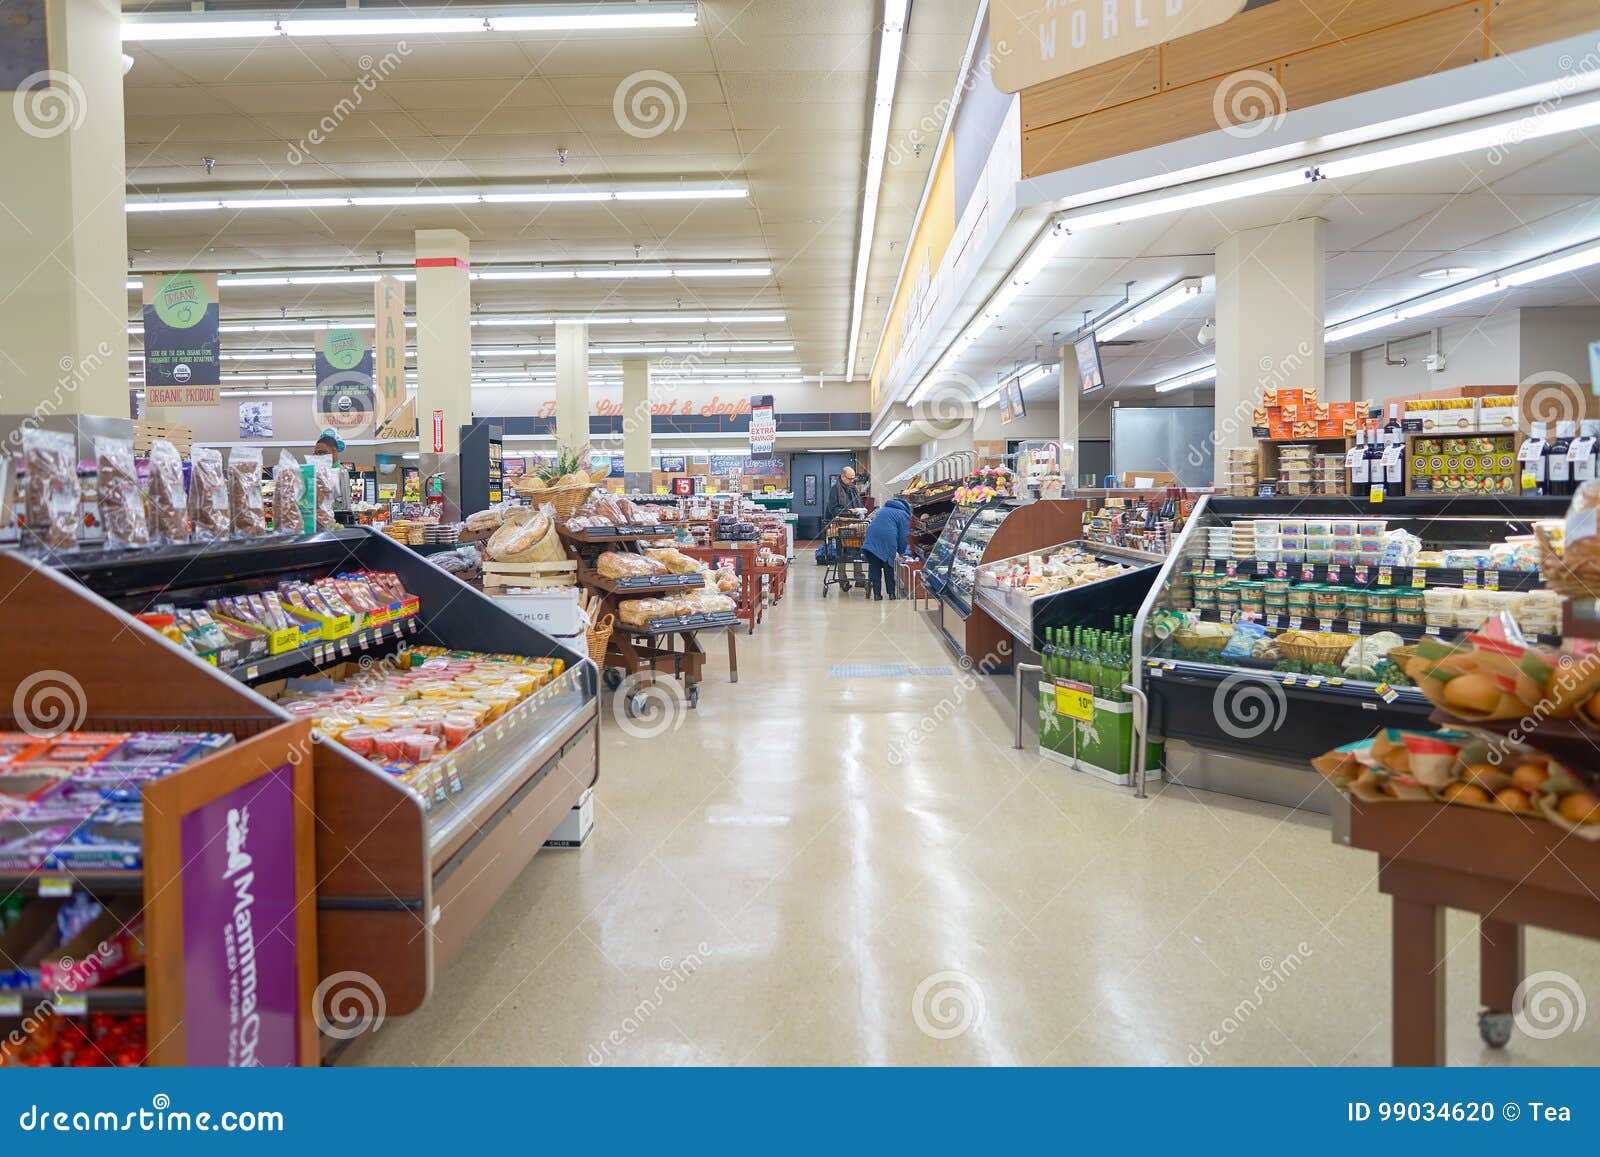 Jewel-Osco, Grocery Stores, Supermarkets, Retail